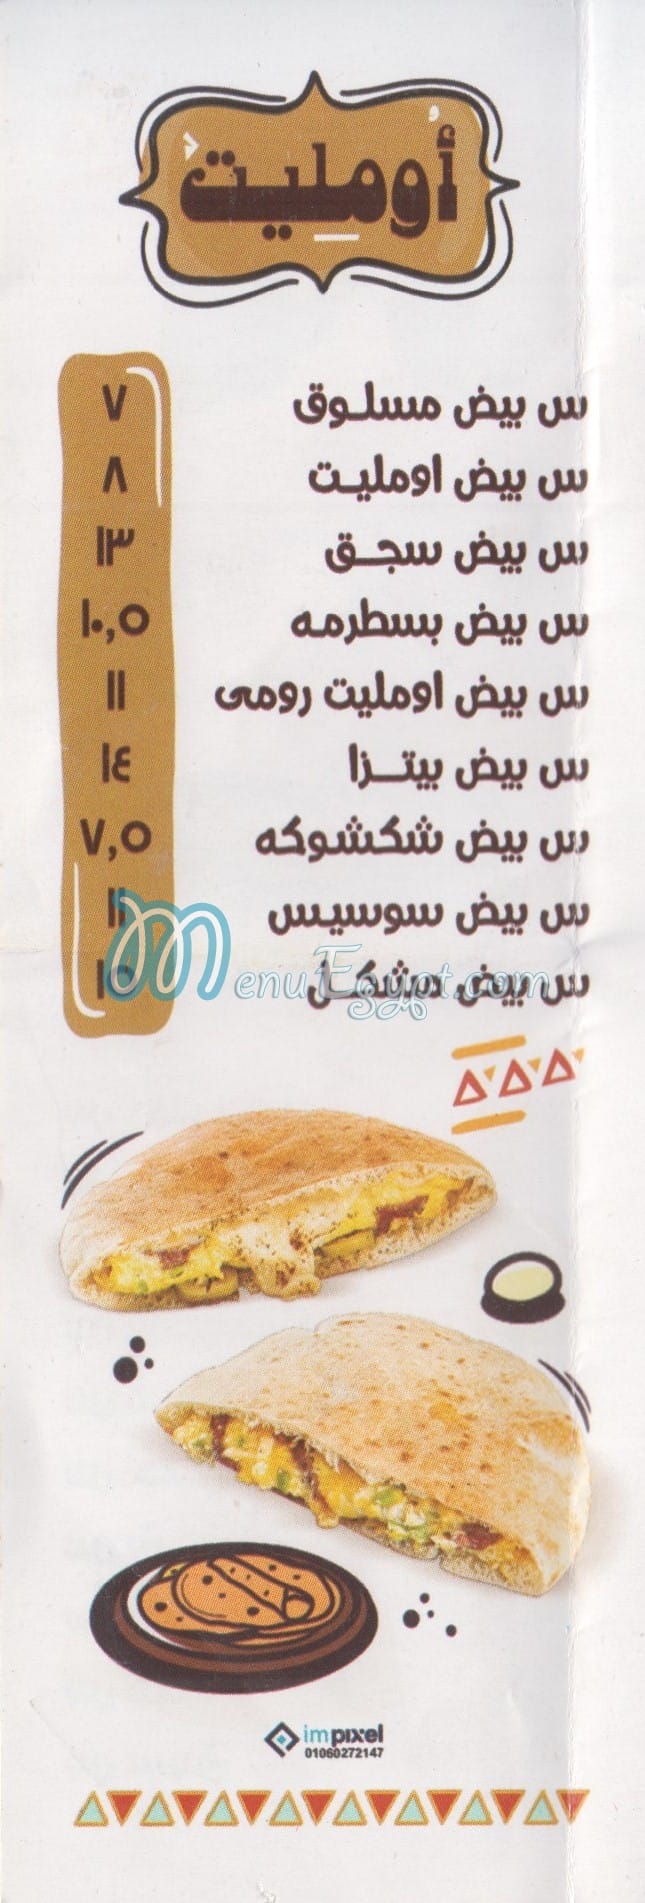 El Shekh Gamal menu prices